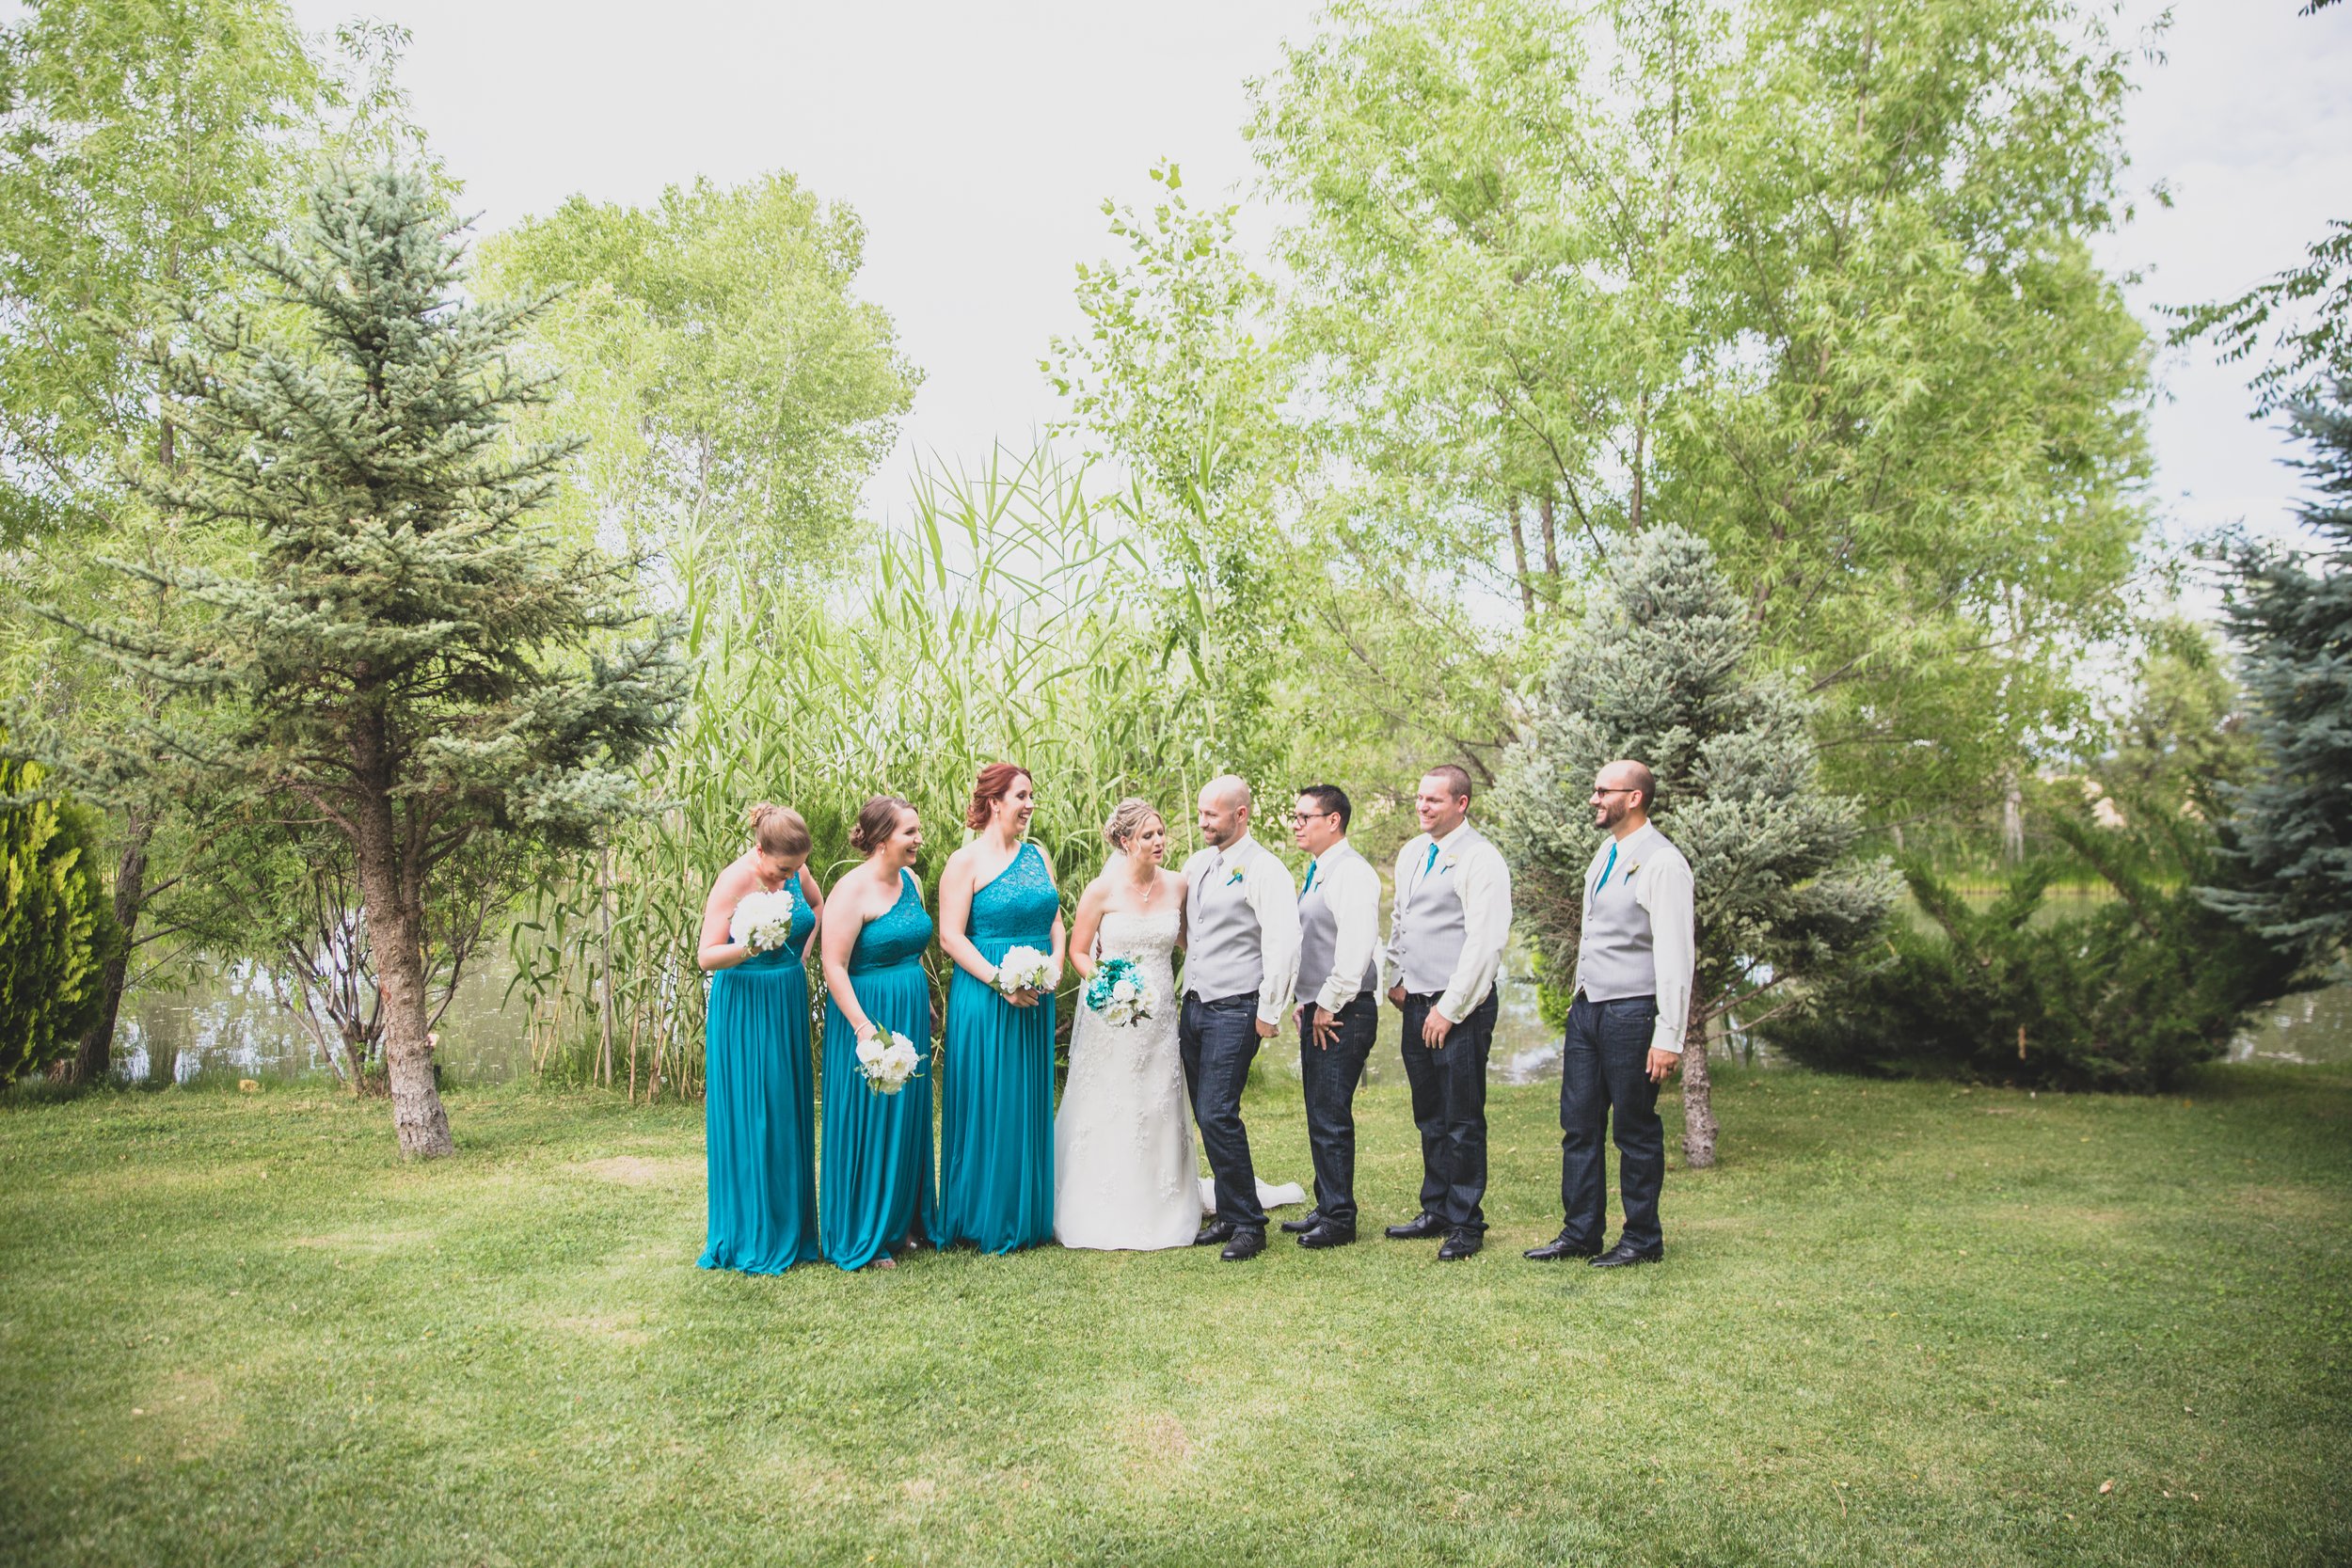  Teal wedding party at Arizona wedding by Northern Arizona Wedding Photographer, Jennifer Lind Schutsky.  